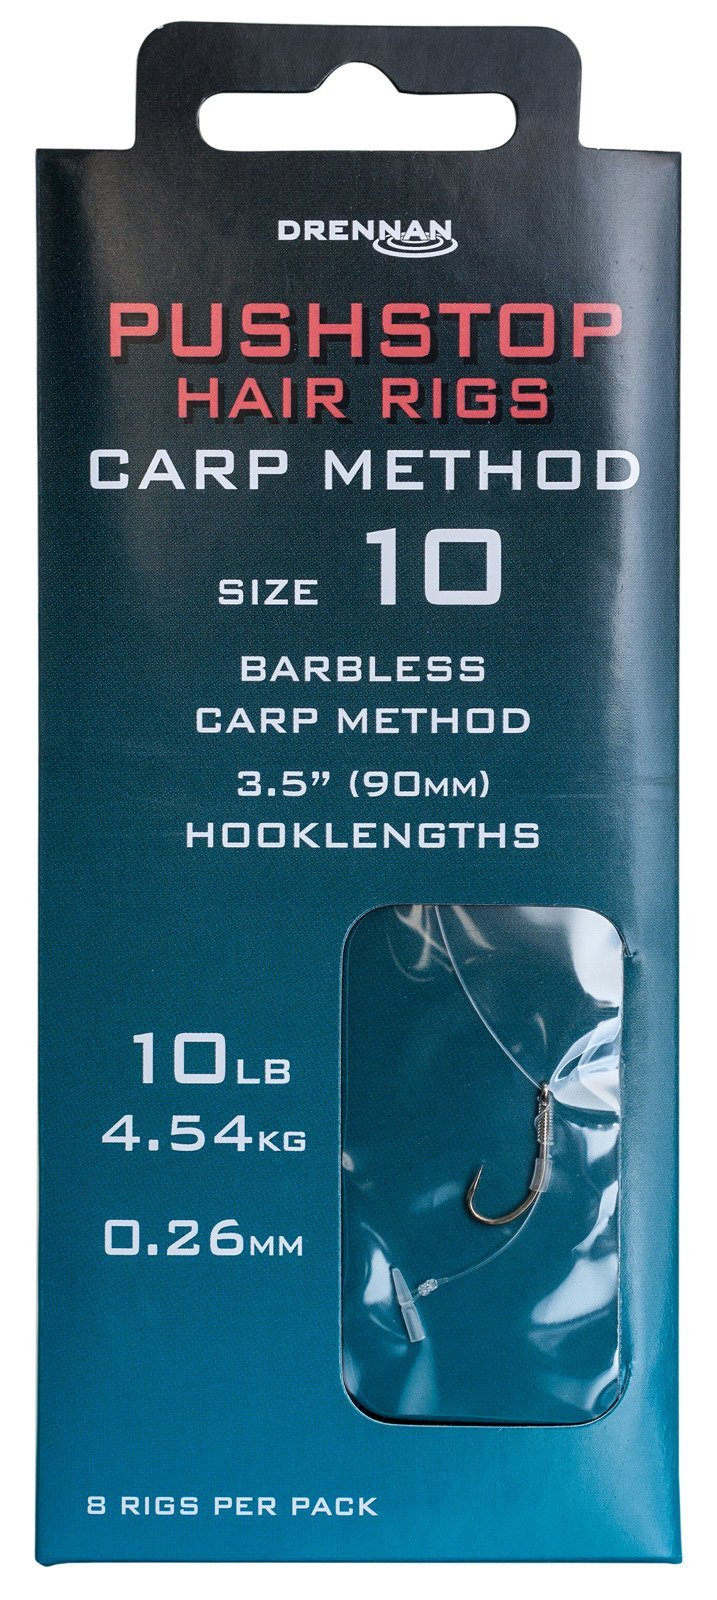 Drennan Pushstop Hair Rigs Carp Method size12 8lb - Przypony 8 szt